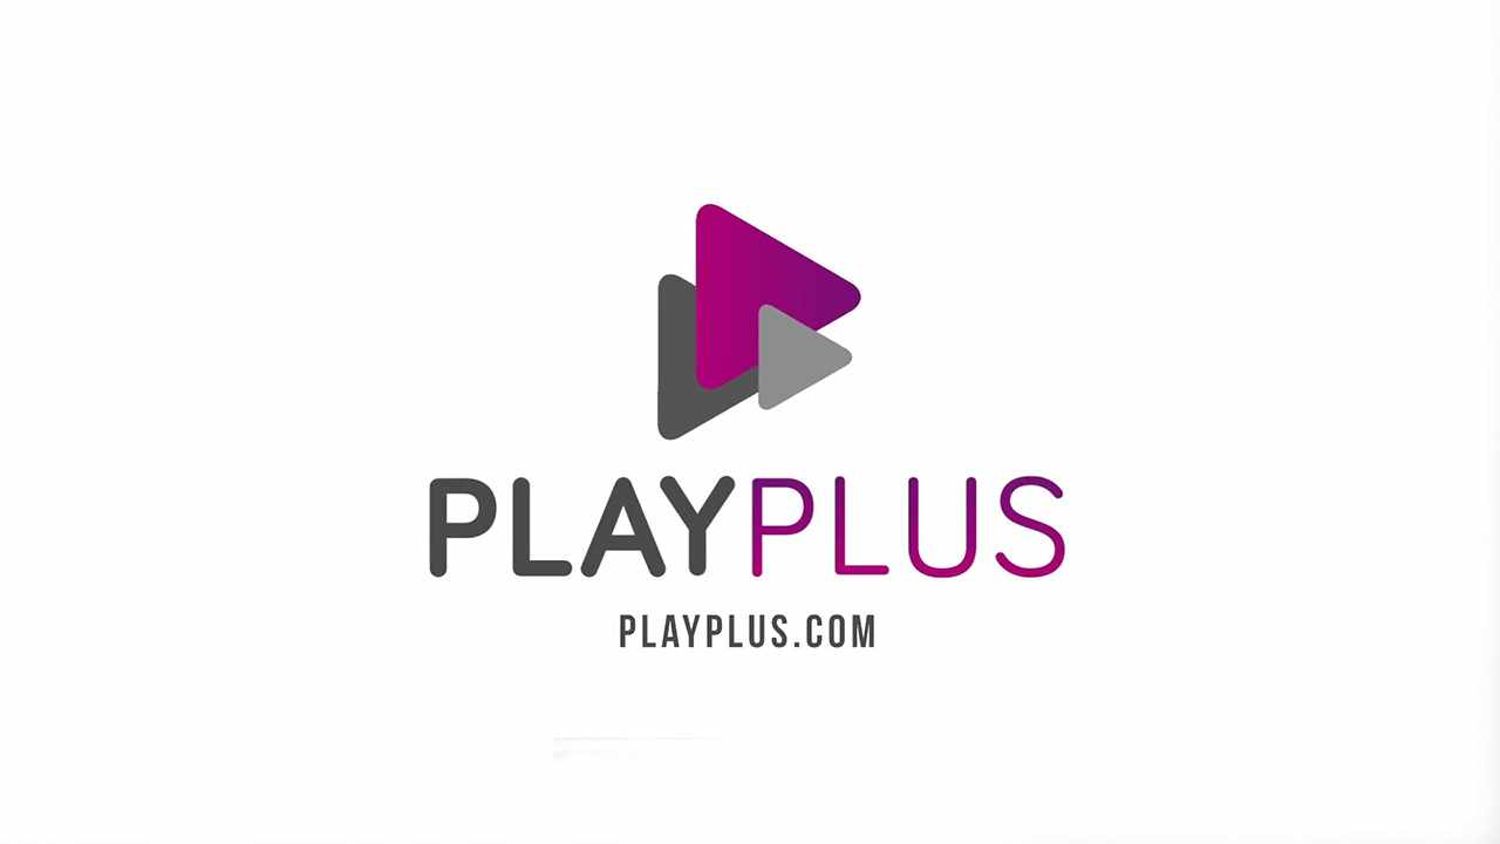 Grupo Record lança PlayPlus, Entretenimento